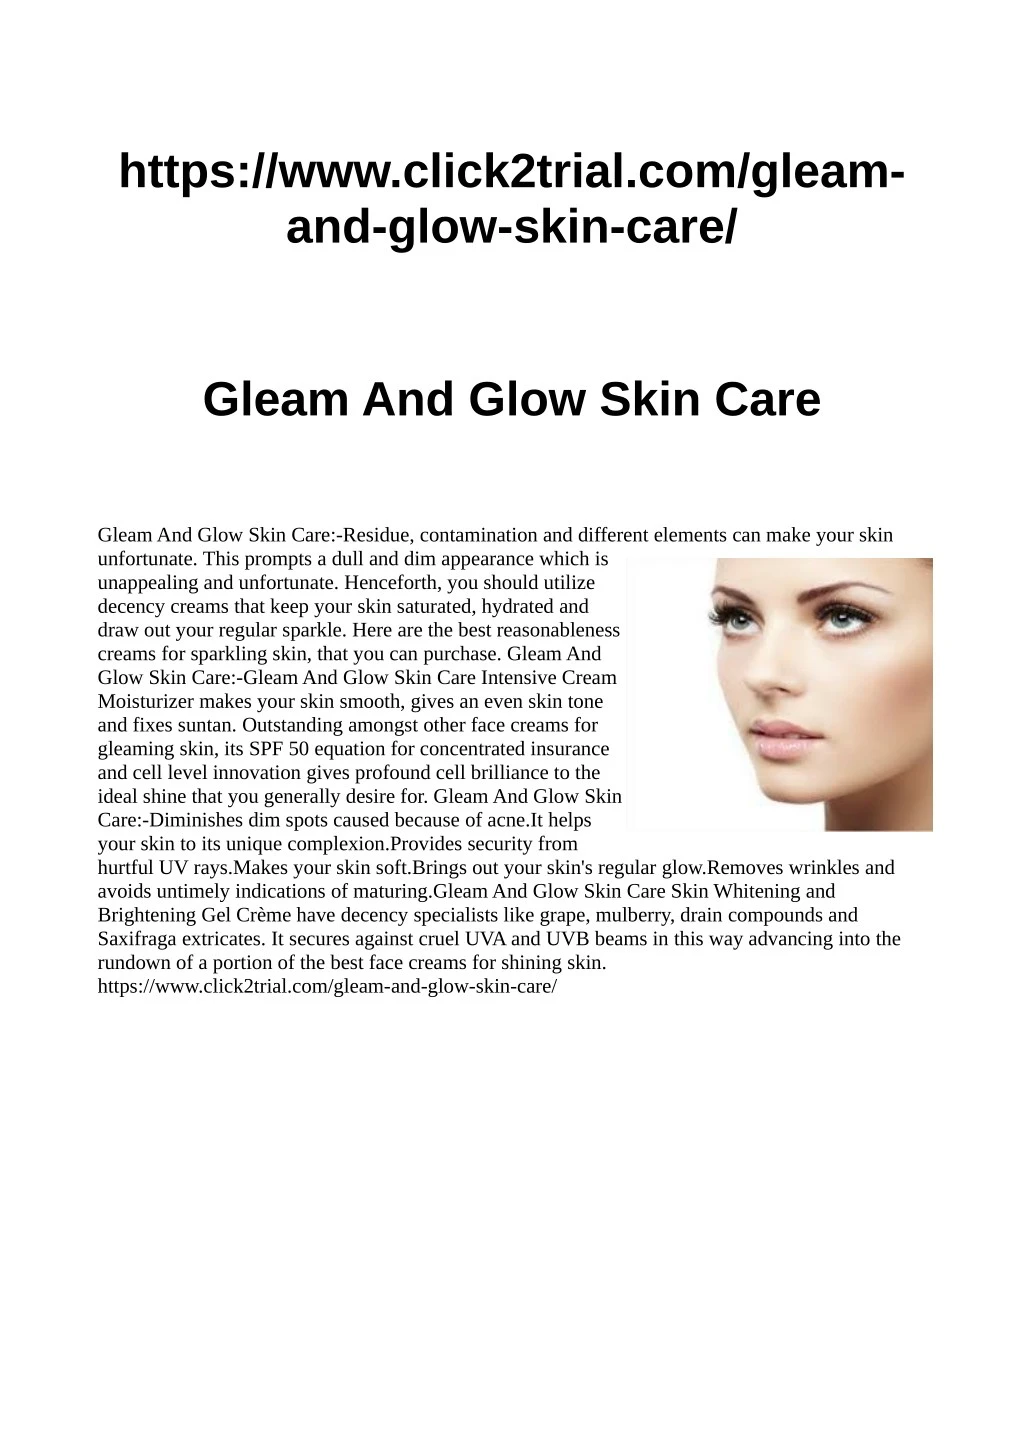 https www click2trial com gleam and glow skin care